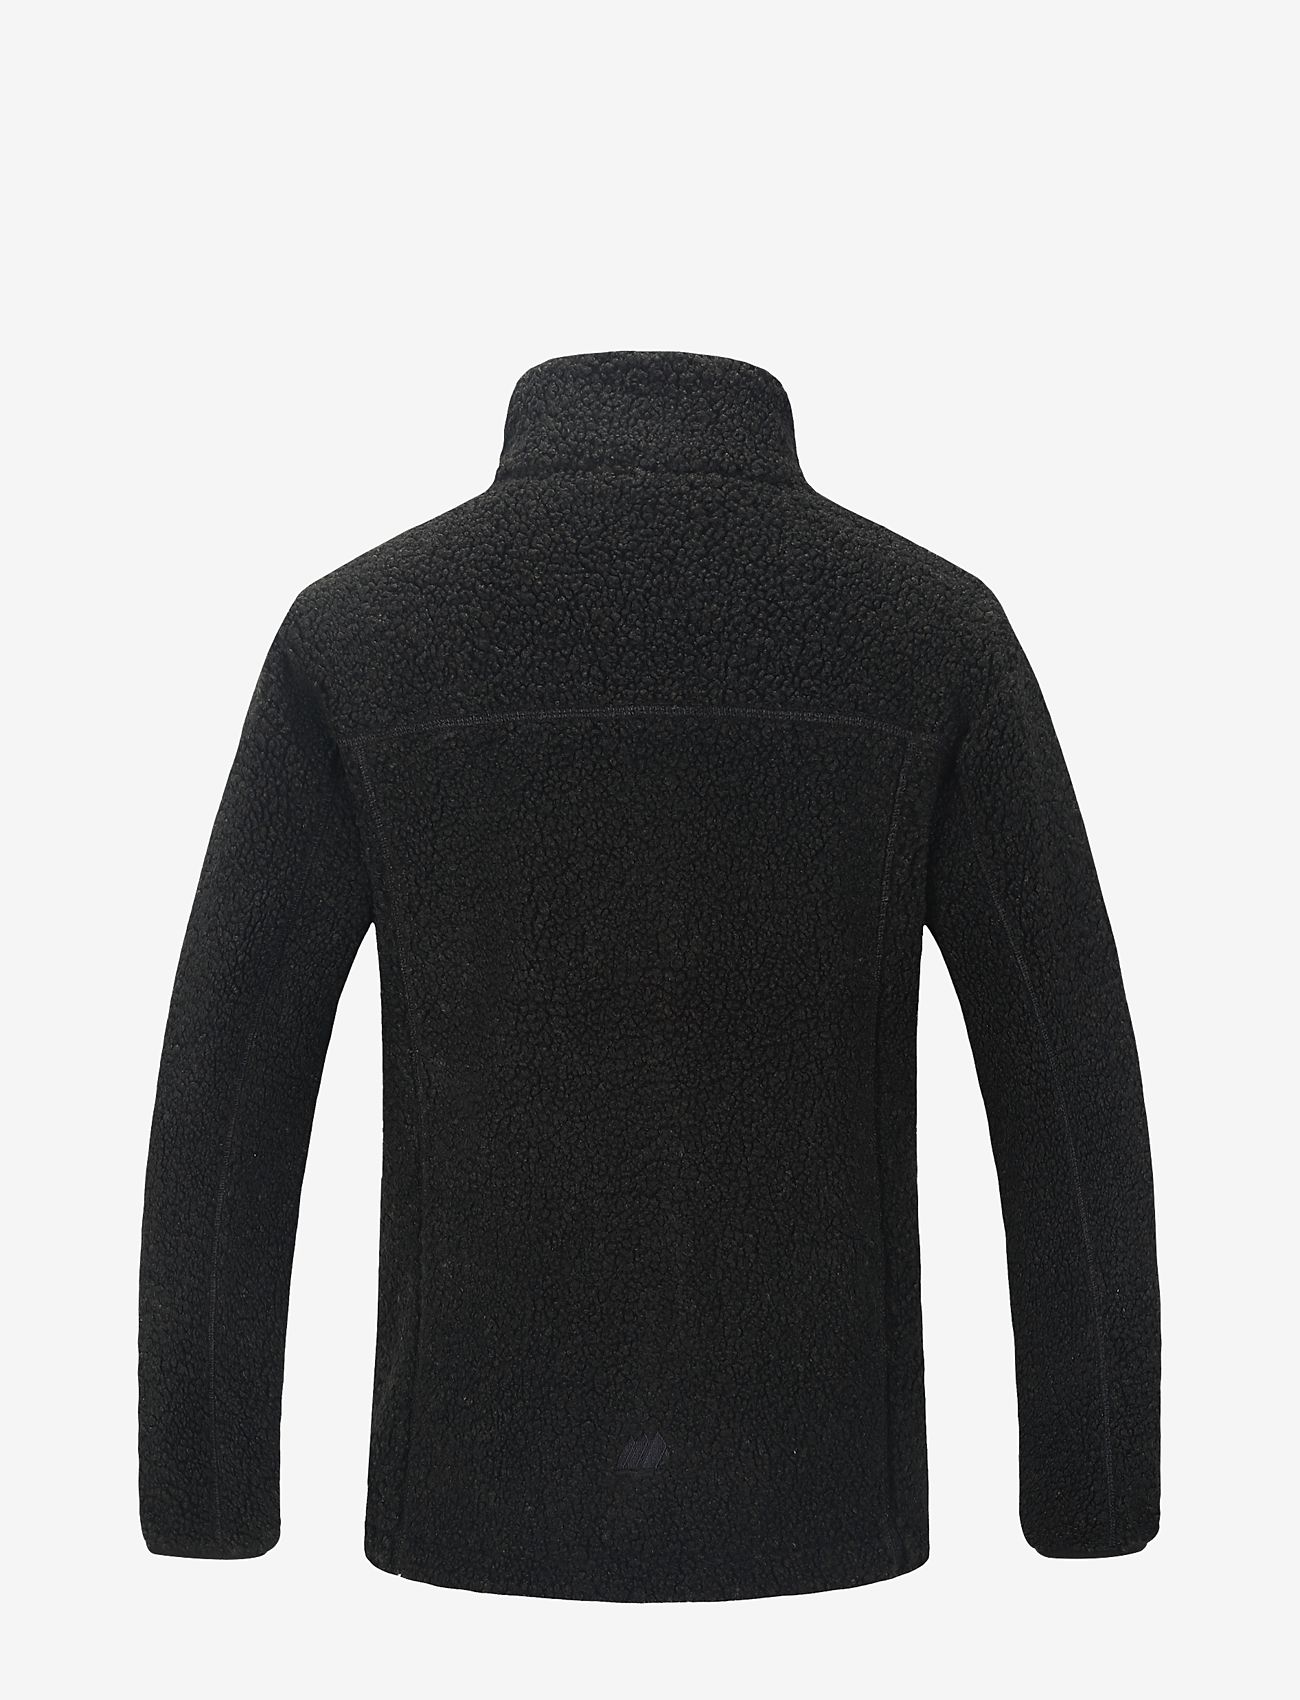 Skogstad - J Leirbekk - fleece jacket - black - 1